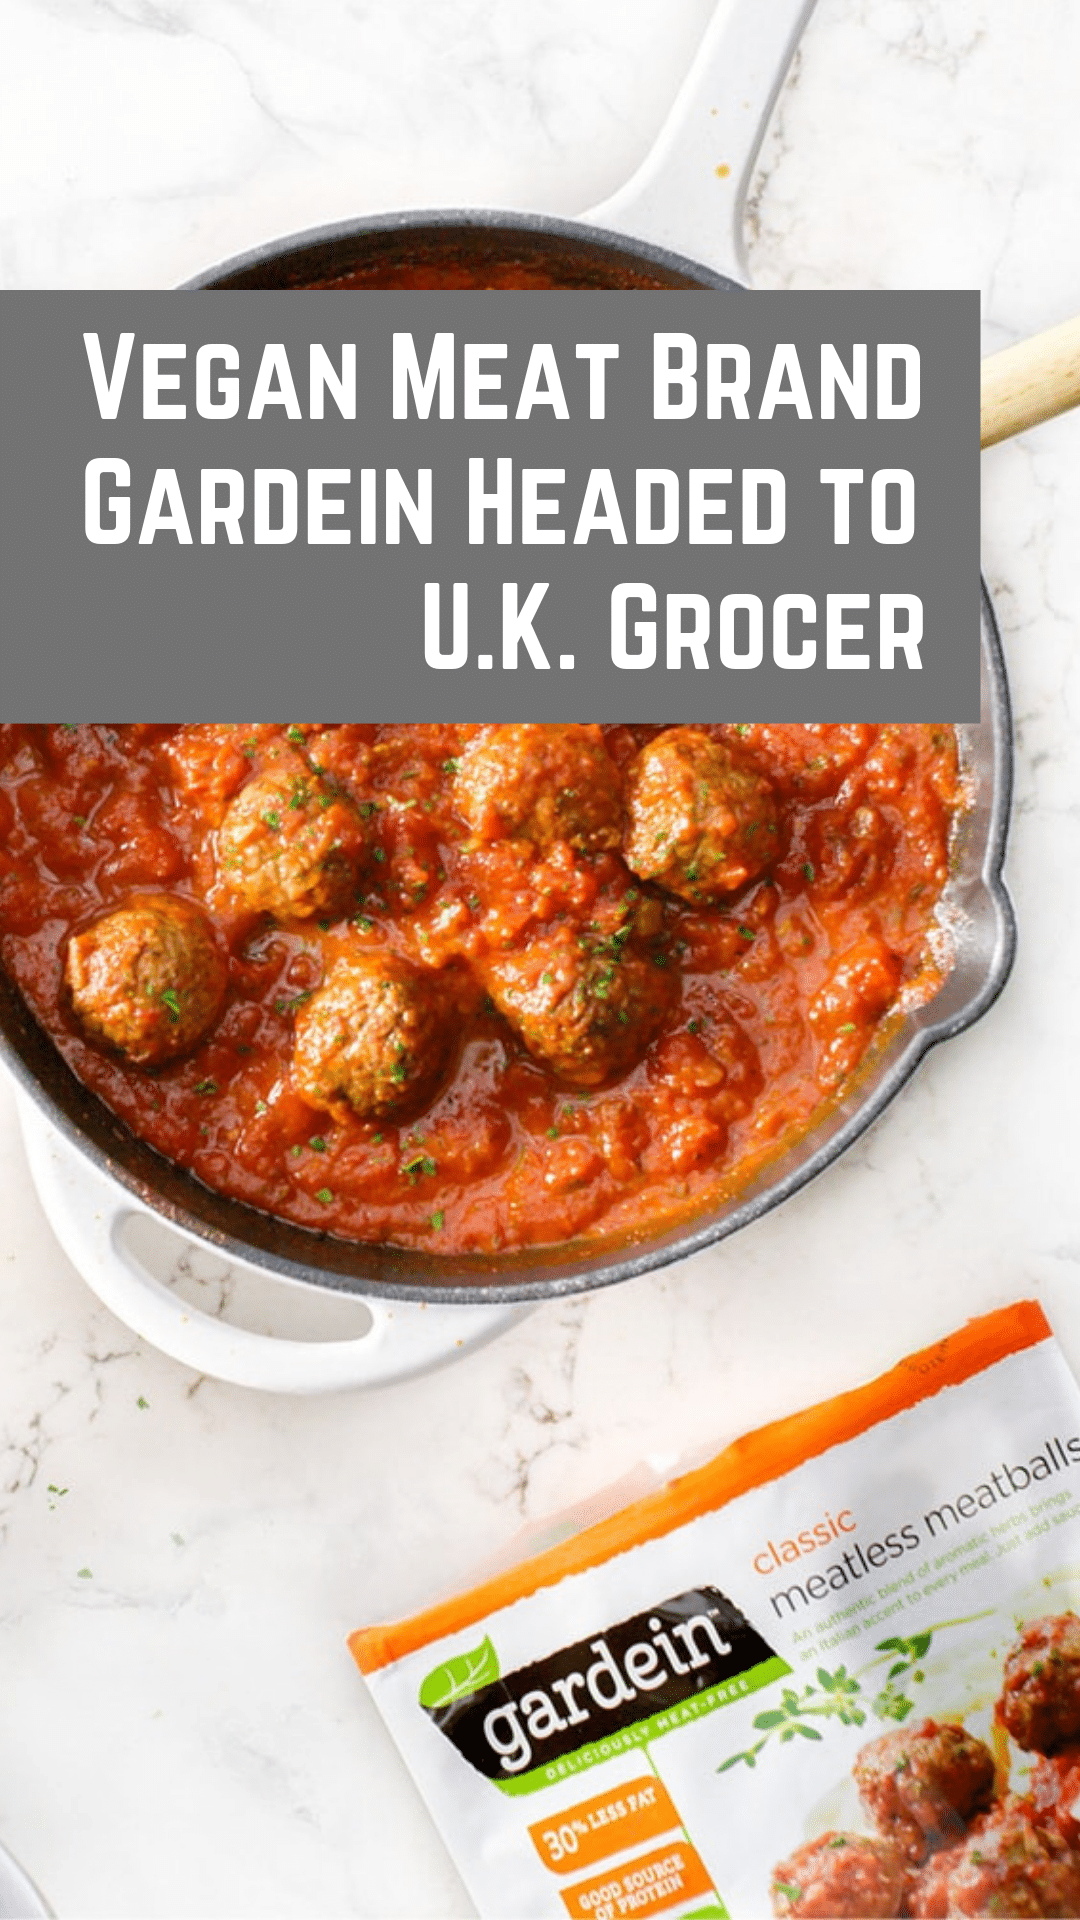 Vegan Meat Brand Gardein Headed to U.K. Grocer in 2019